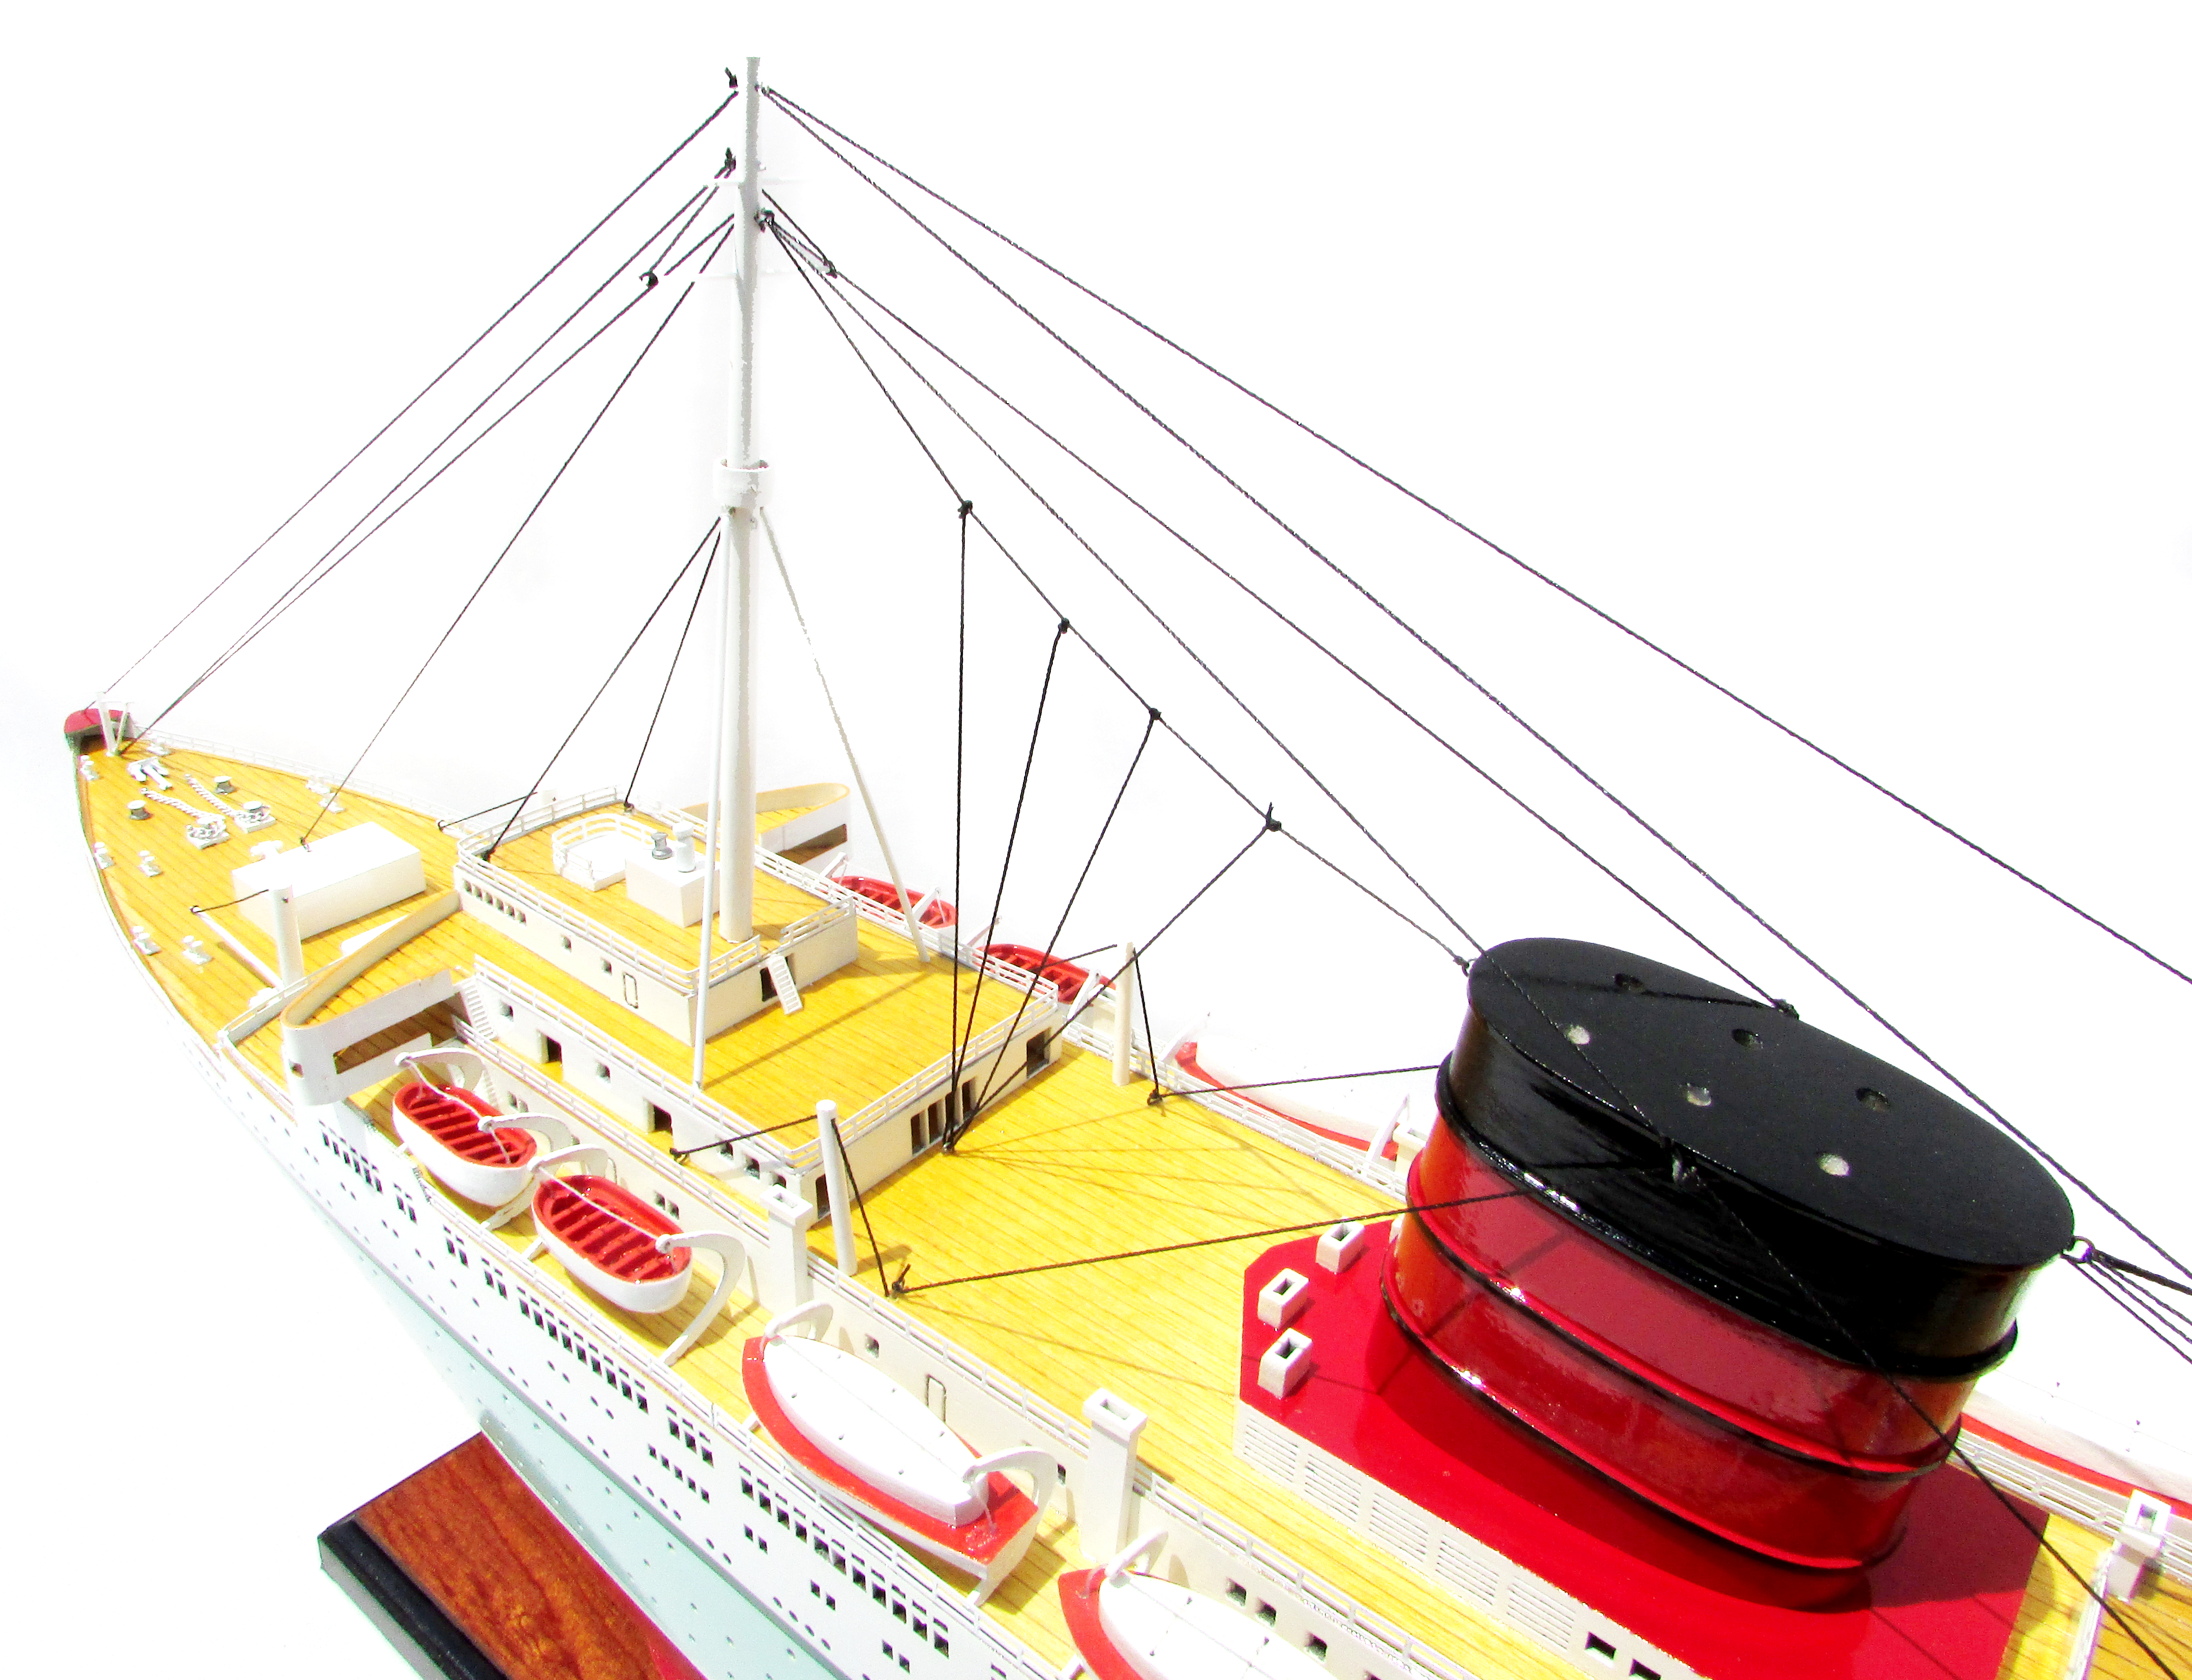 Thuyền gỗ trang trí RMS CARONIA